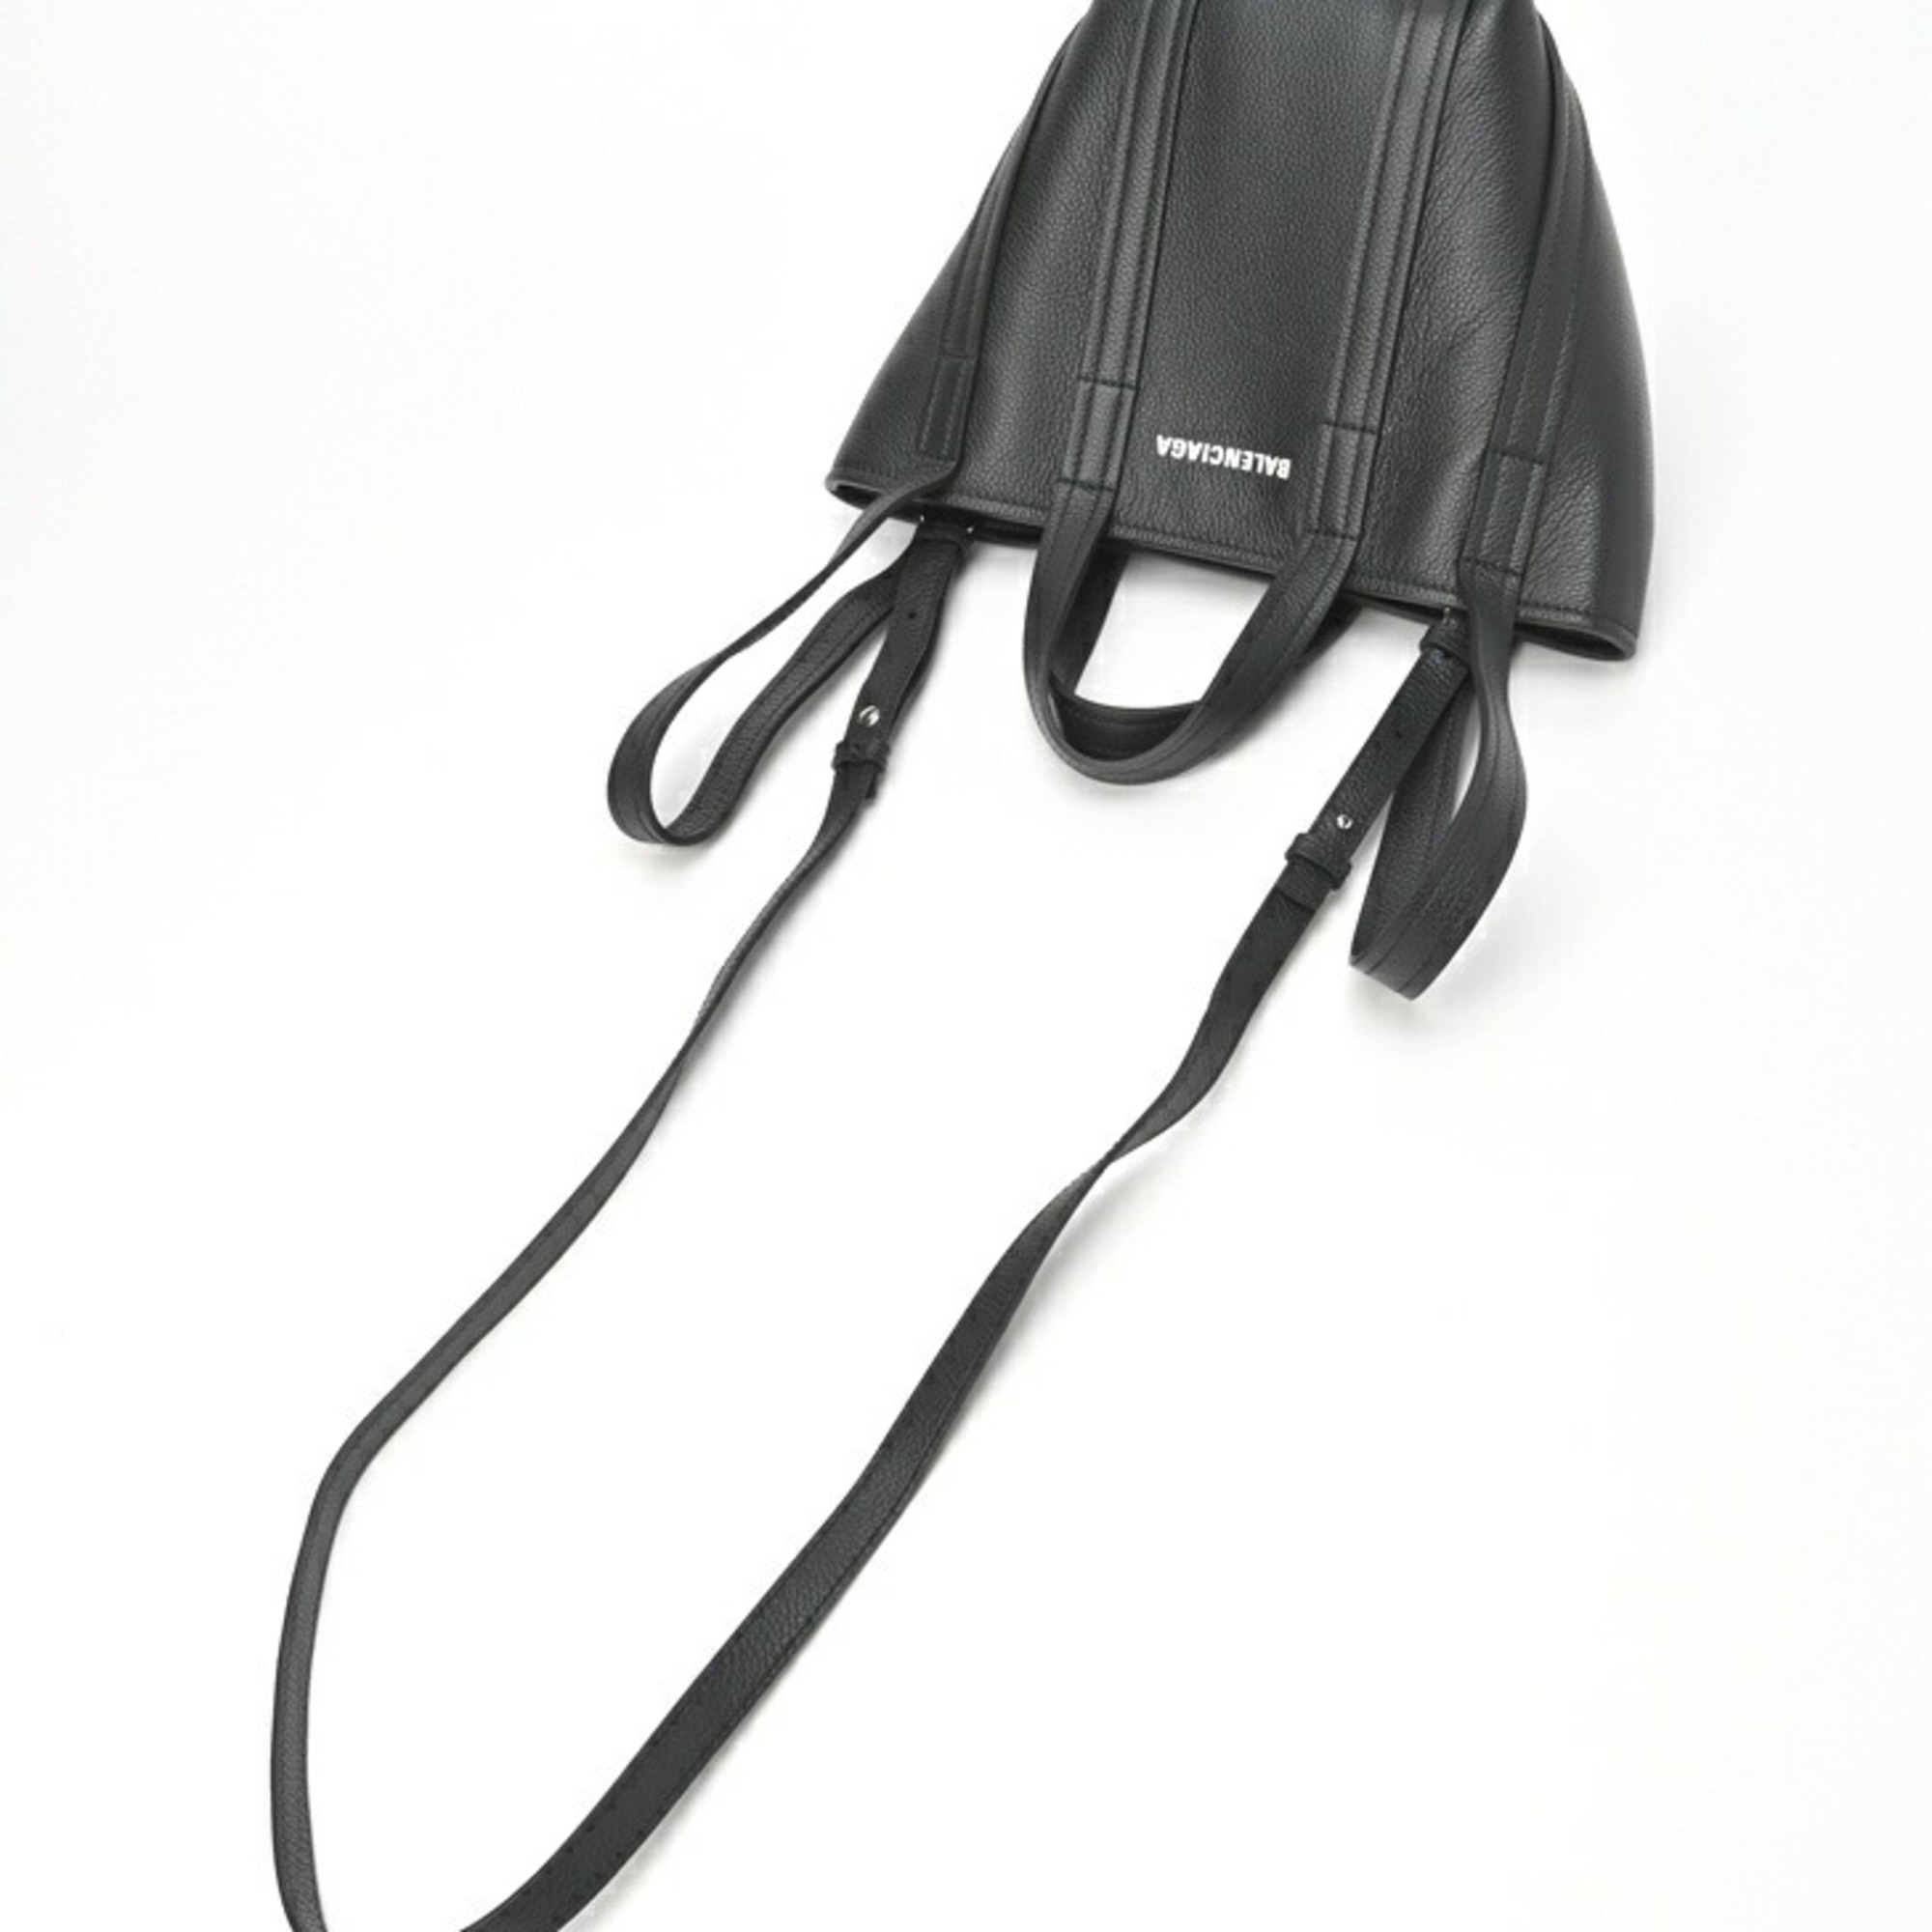 Balenciaga Everyday XS North South Shoulder Tote Bag 672793 Black S-155128